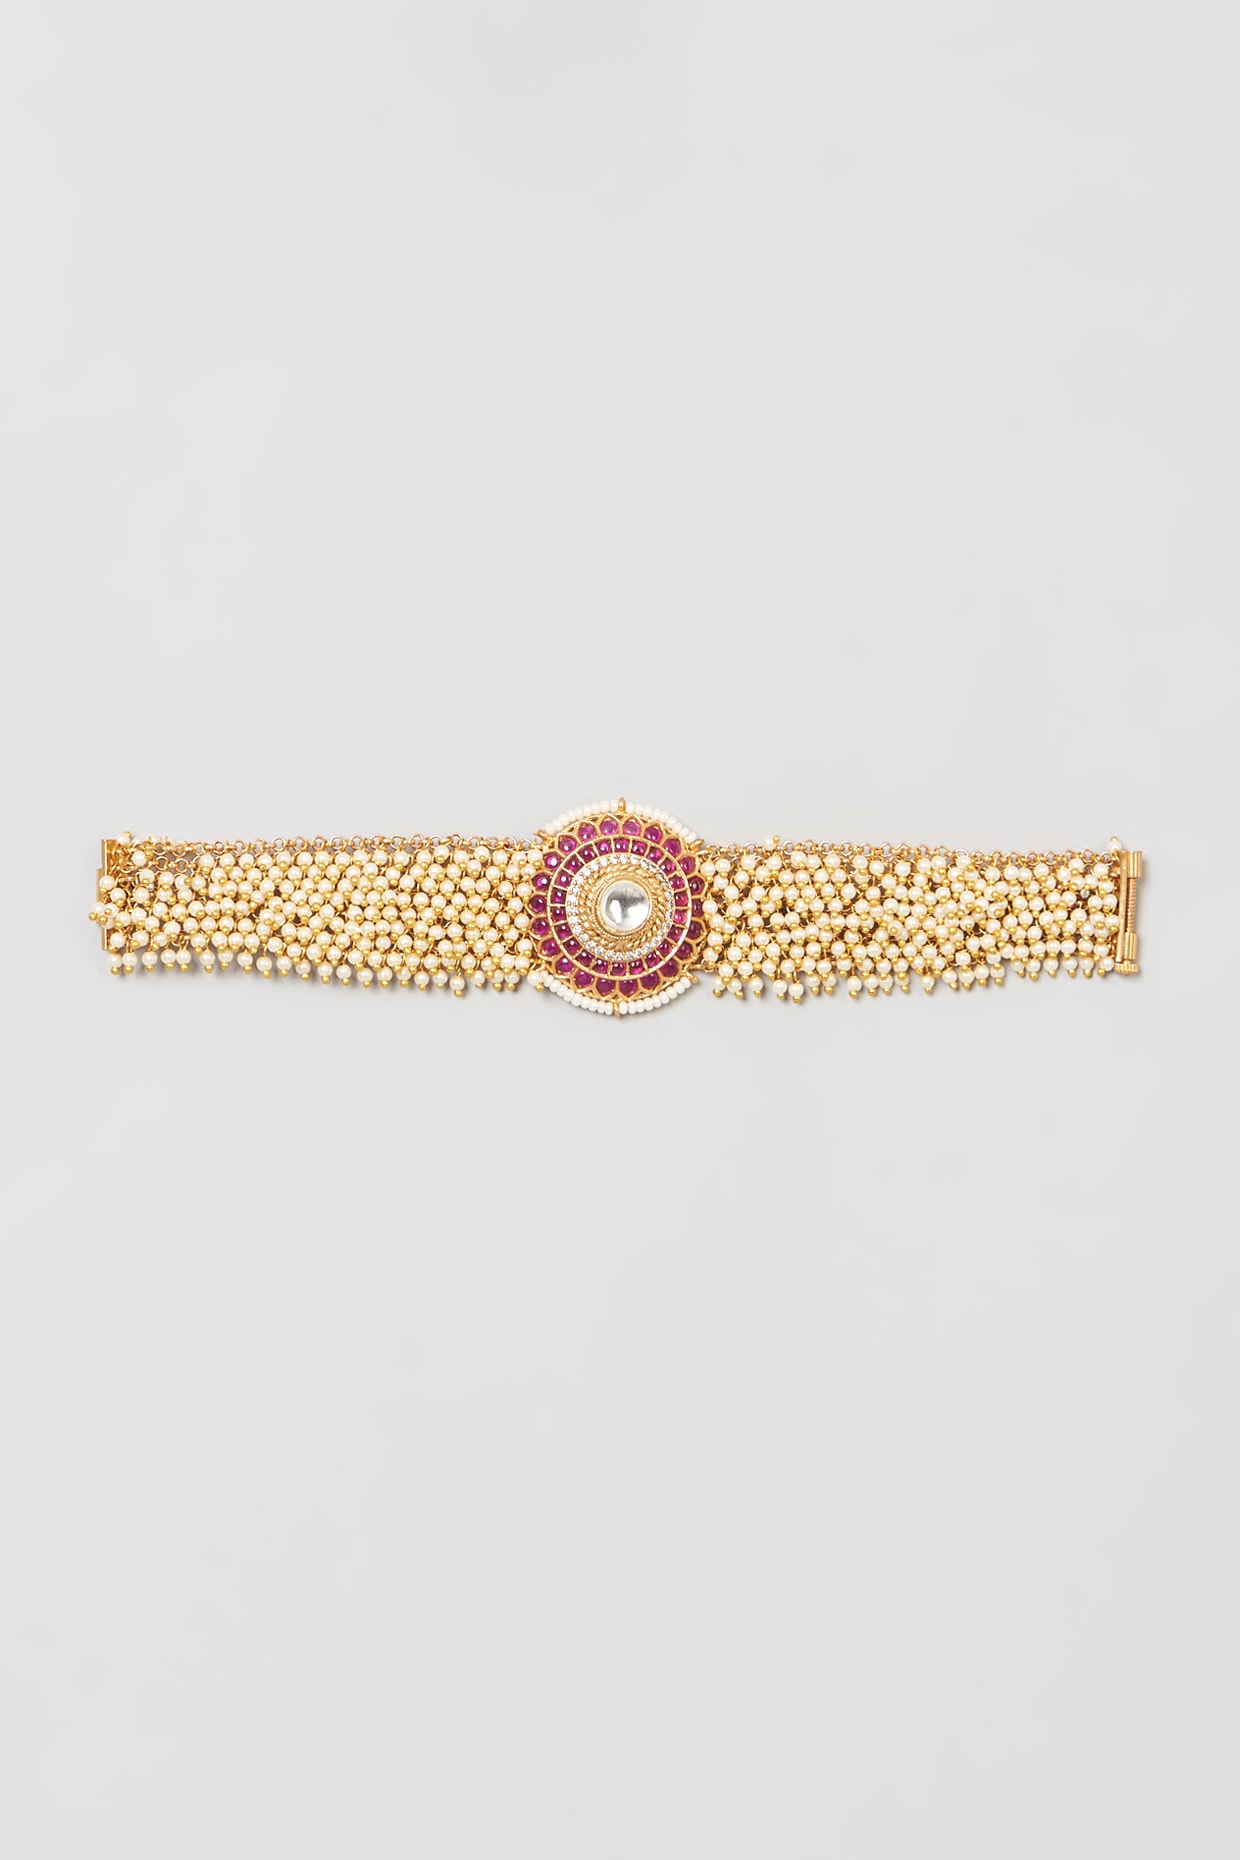 RUBY REAL KUNDAN POLKI LOOK GOLD PLATED OPENABLE BRACELET – Sanvi Jewels